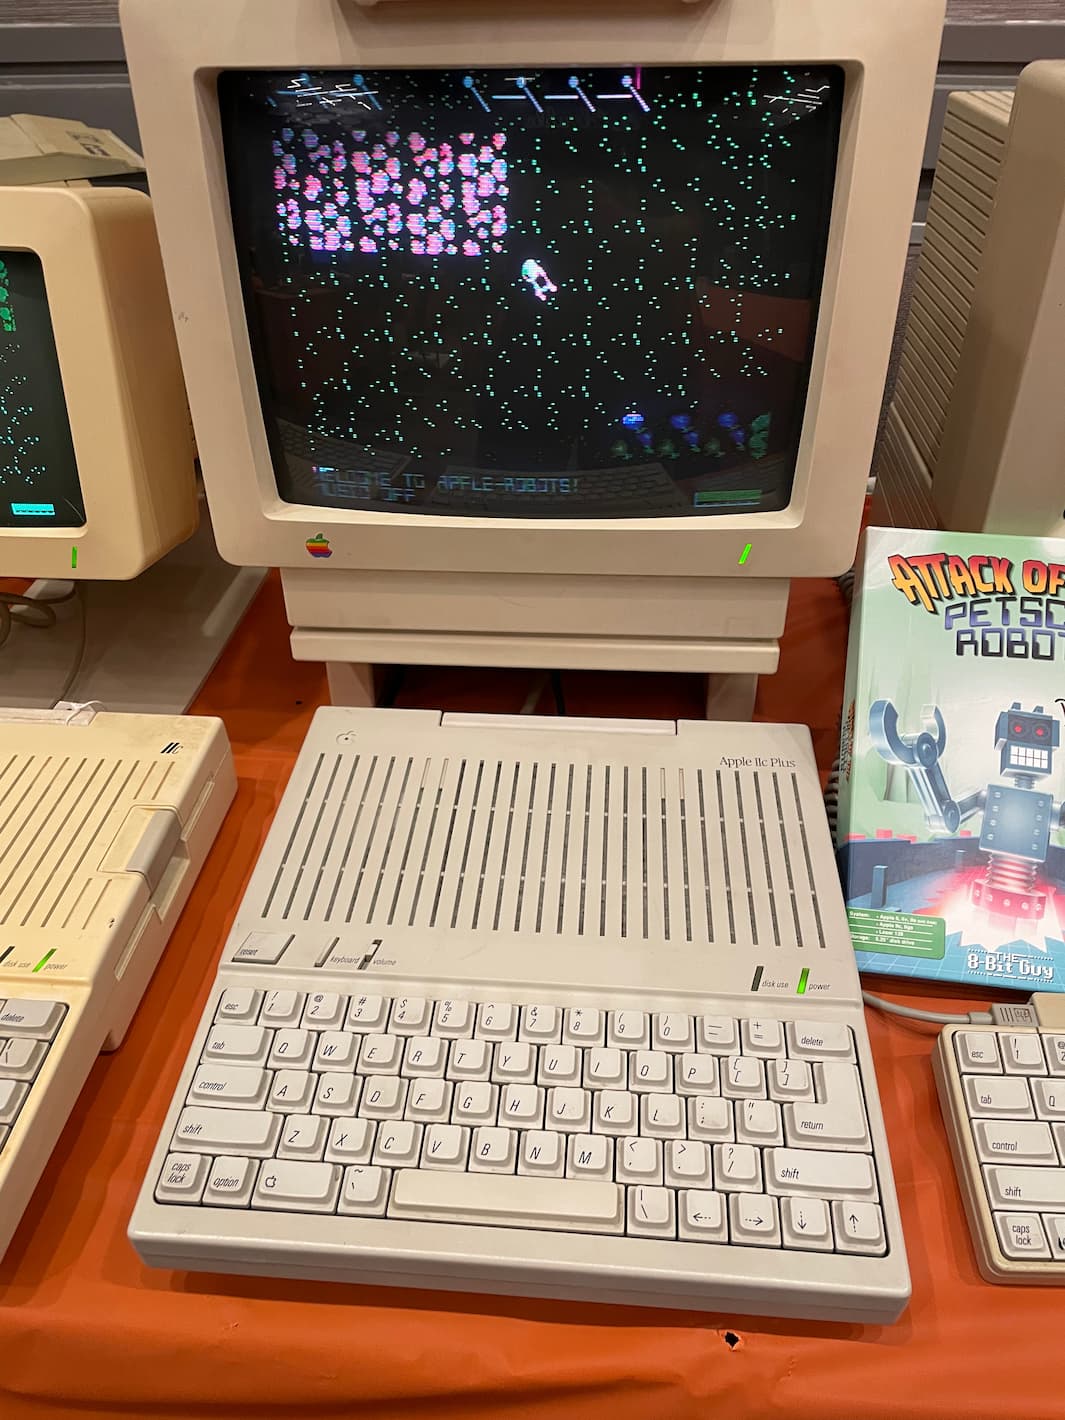 An Apple IIc Plus